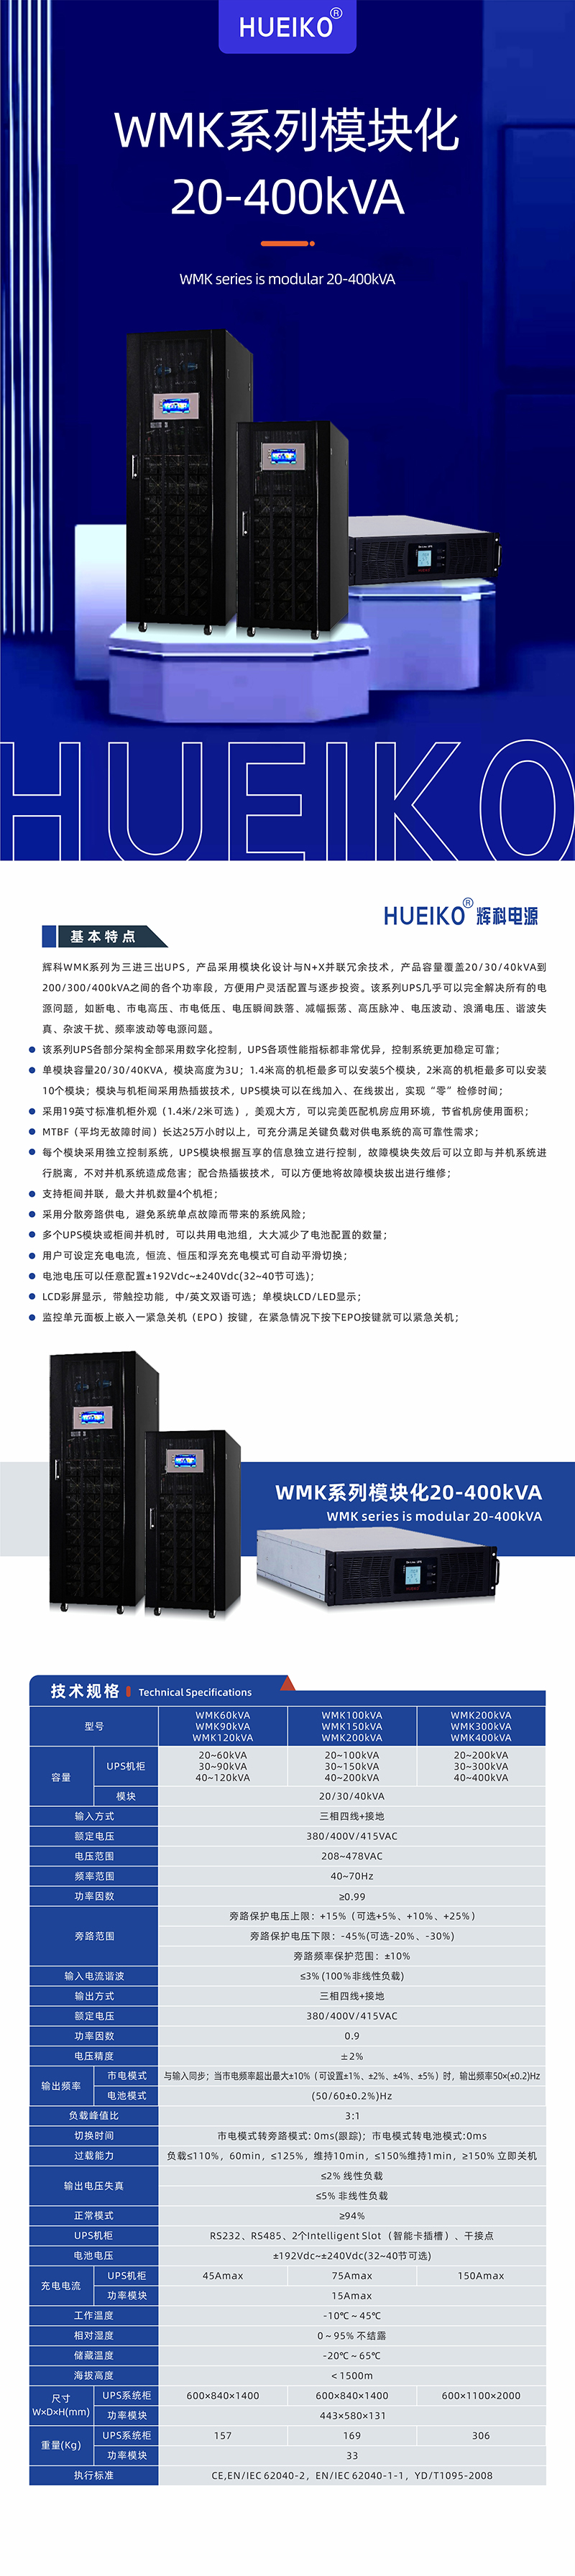 WMK系列模块化20-400kVA 详情页 上传.jpg